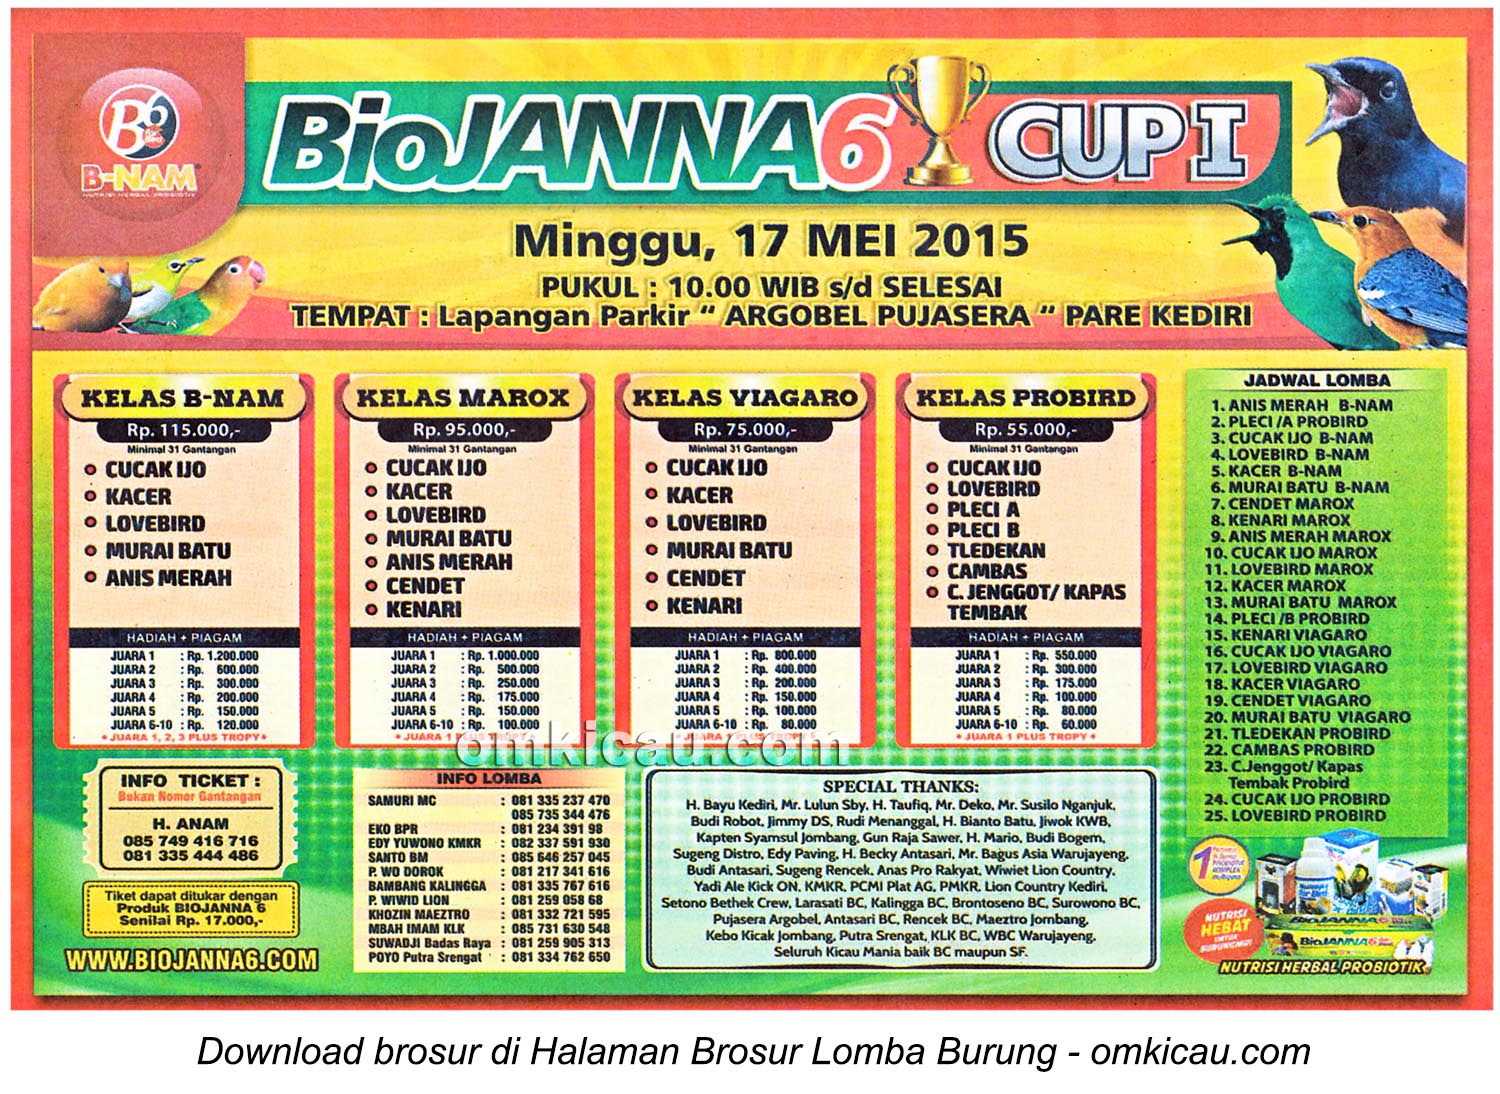 Brosur Lomba Burung Berkicau BioJanna6 Cup I, Kediri, 17 Mei 2015